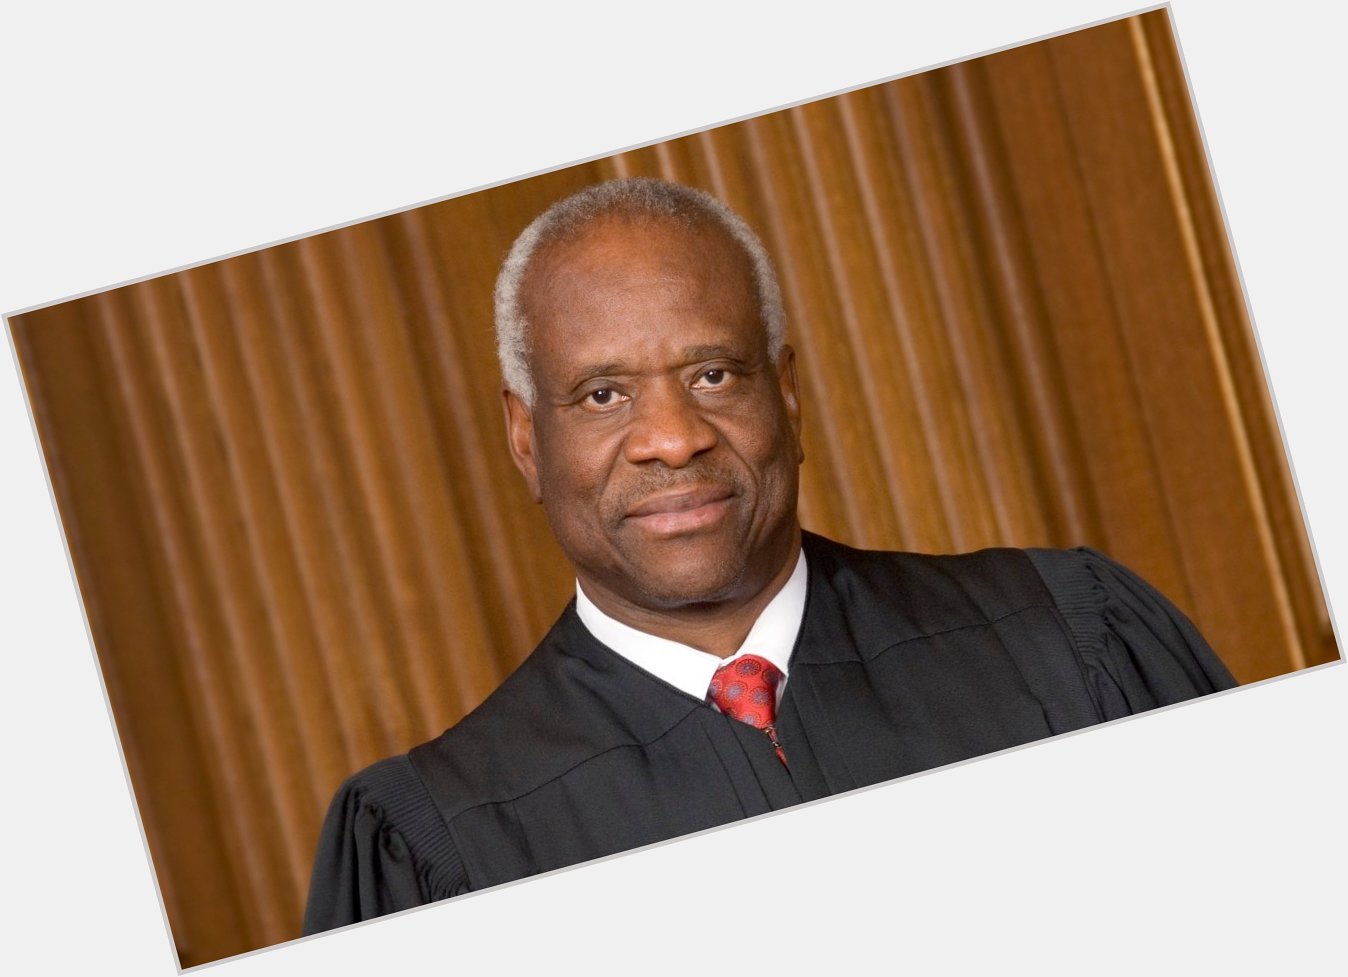 Happy birthday to Justice Clarence Thomas a true American patriot!  